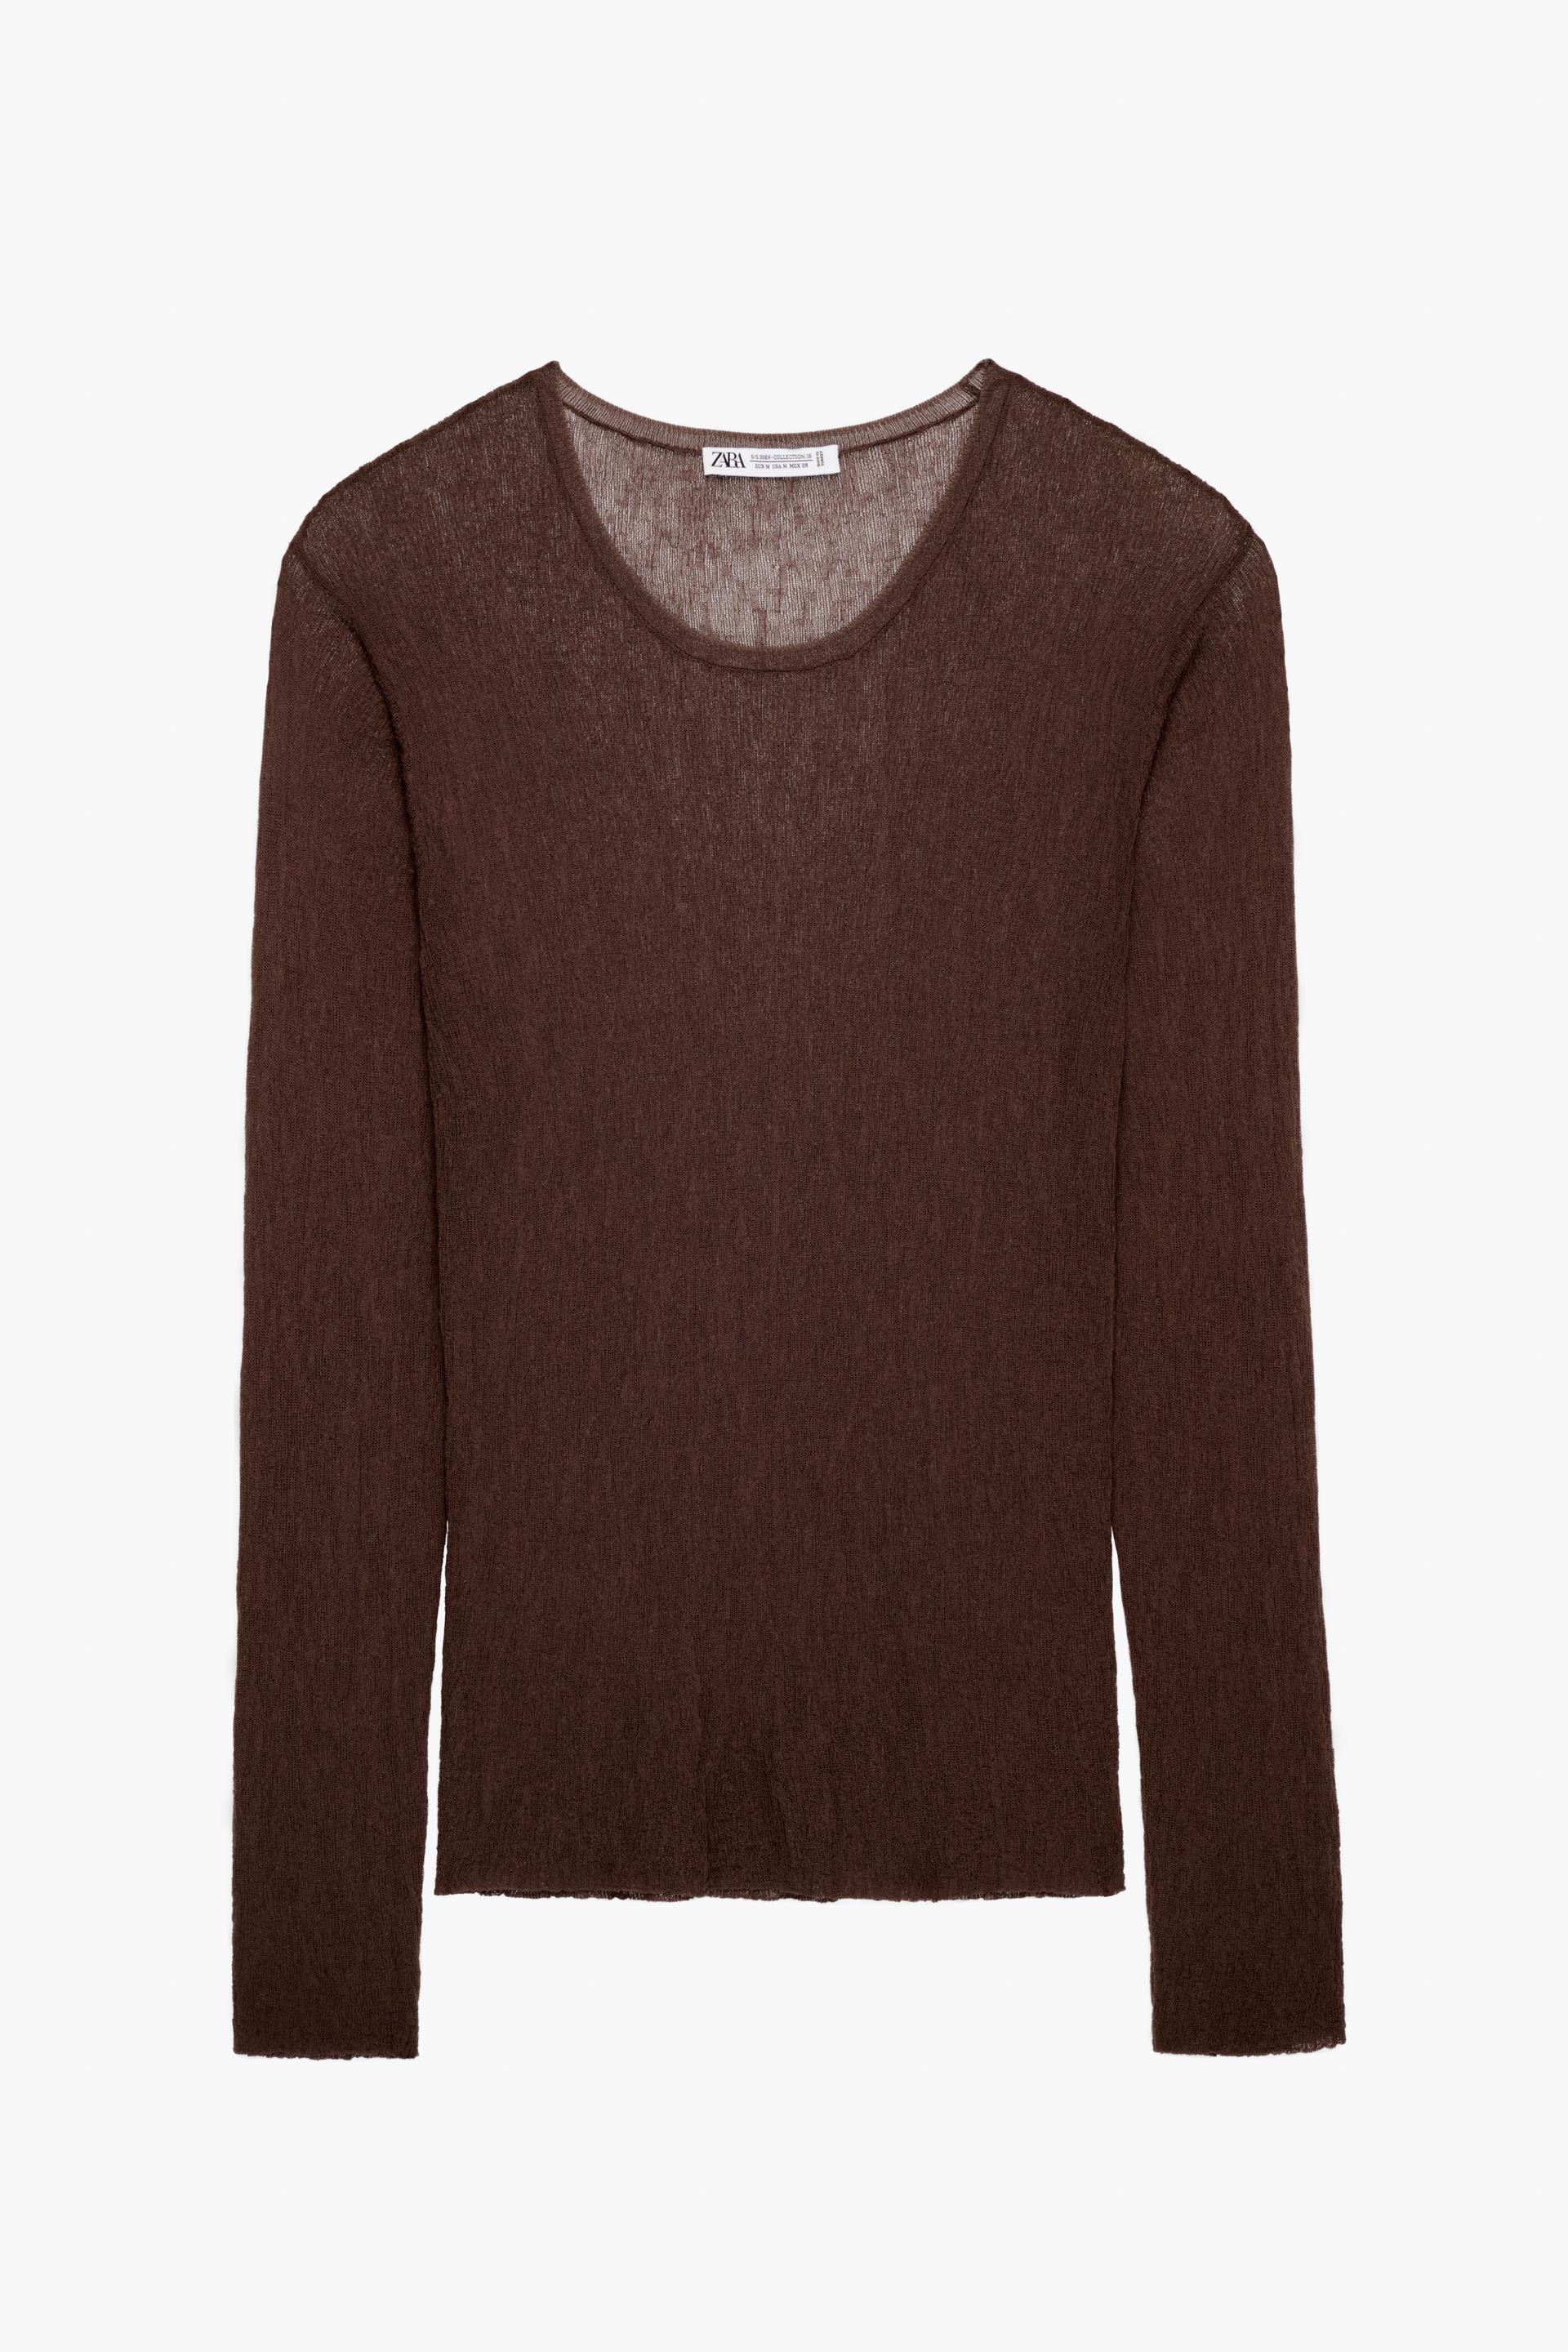 свитер zara textured limited edition коричневый Свитер Zara Textured Limited Edition, коричневый